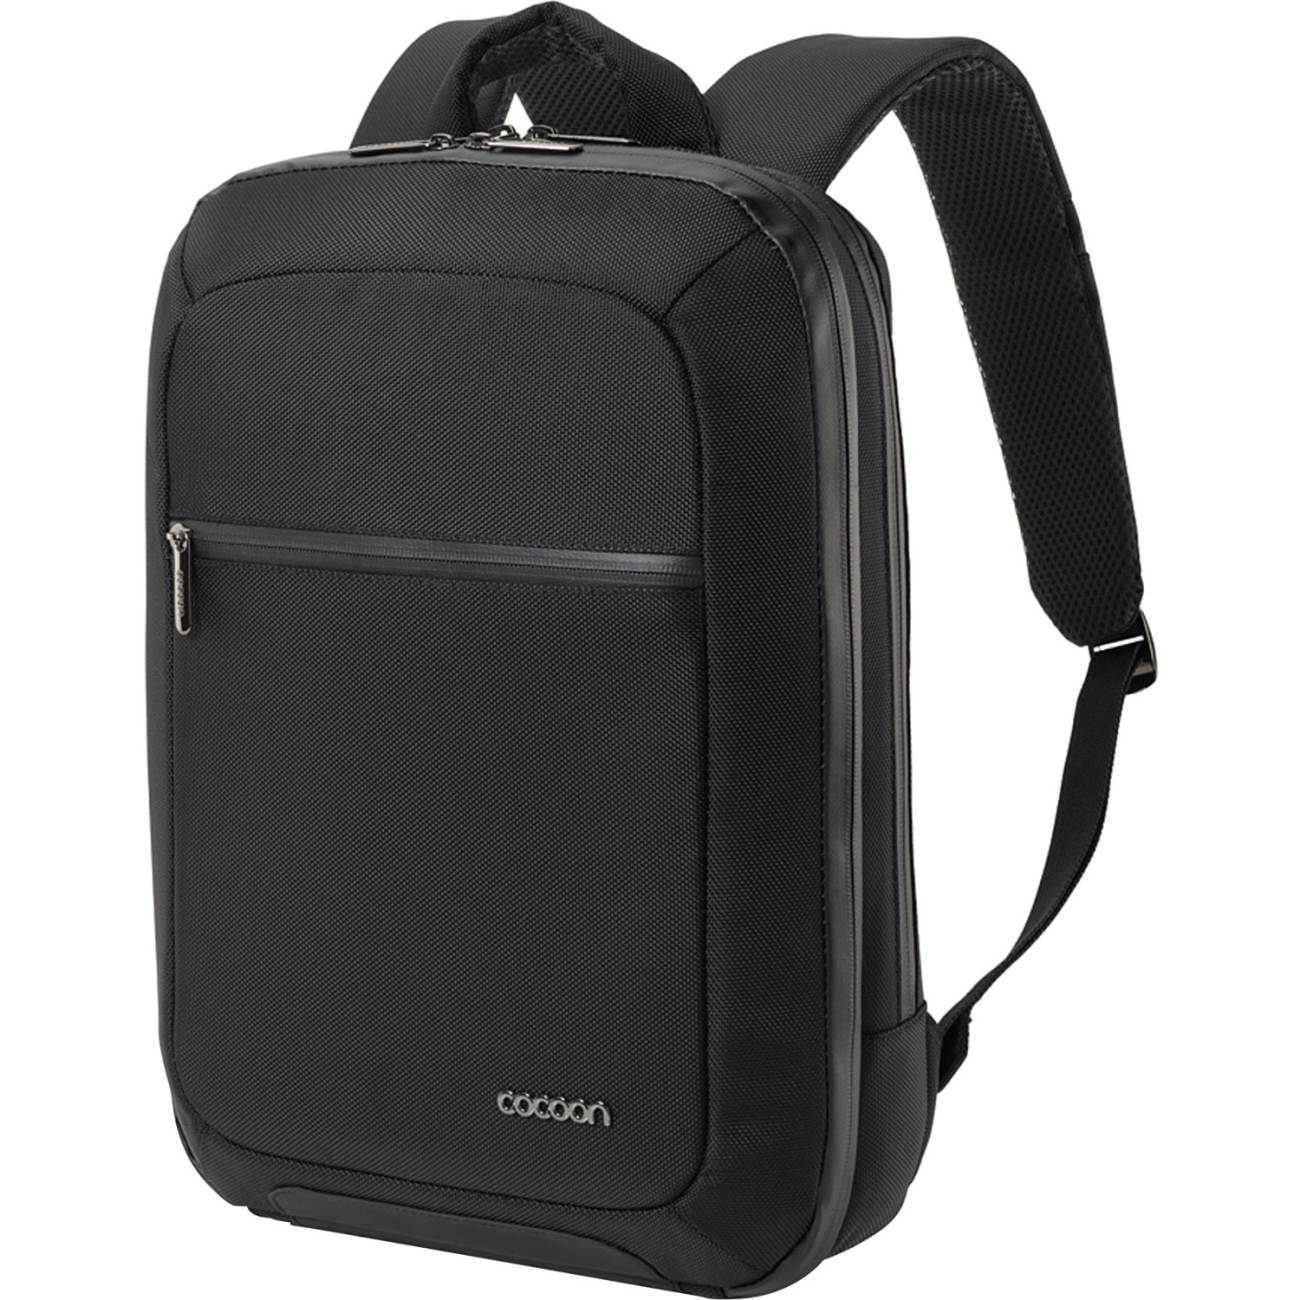 Cocoon Slim 15.6-inch Backpack for Laptop, Black - image 2 of 6